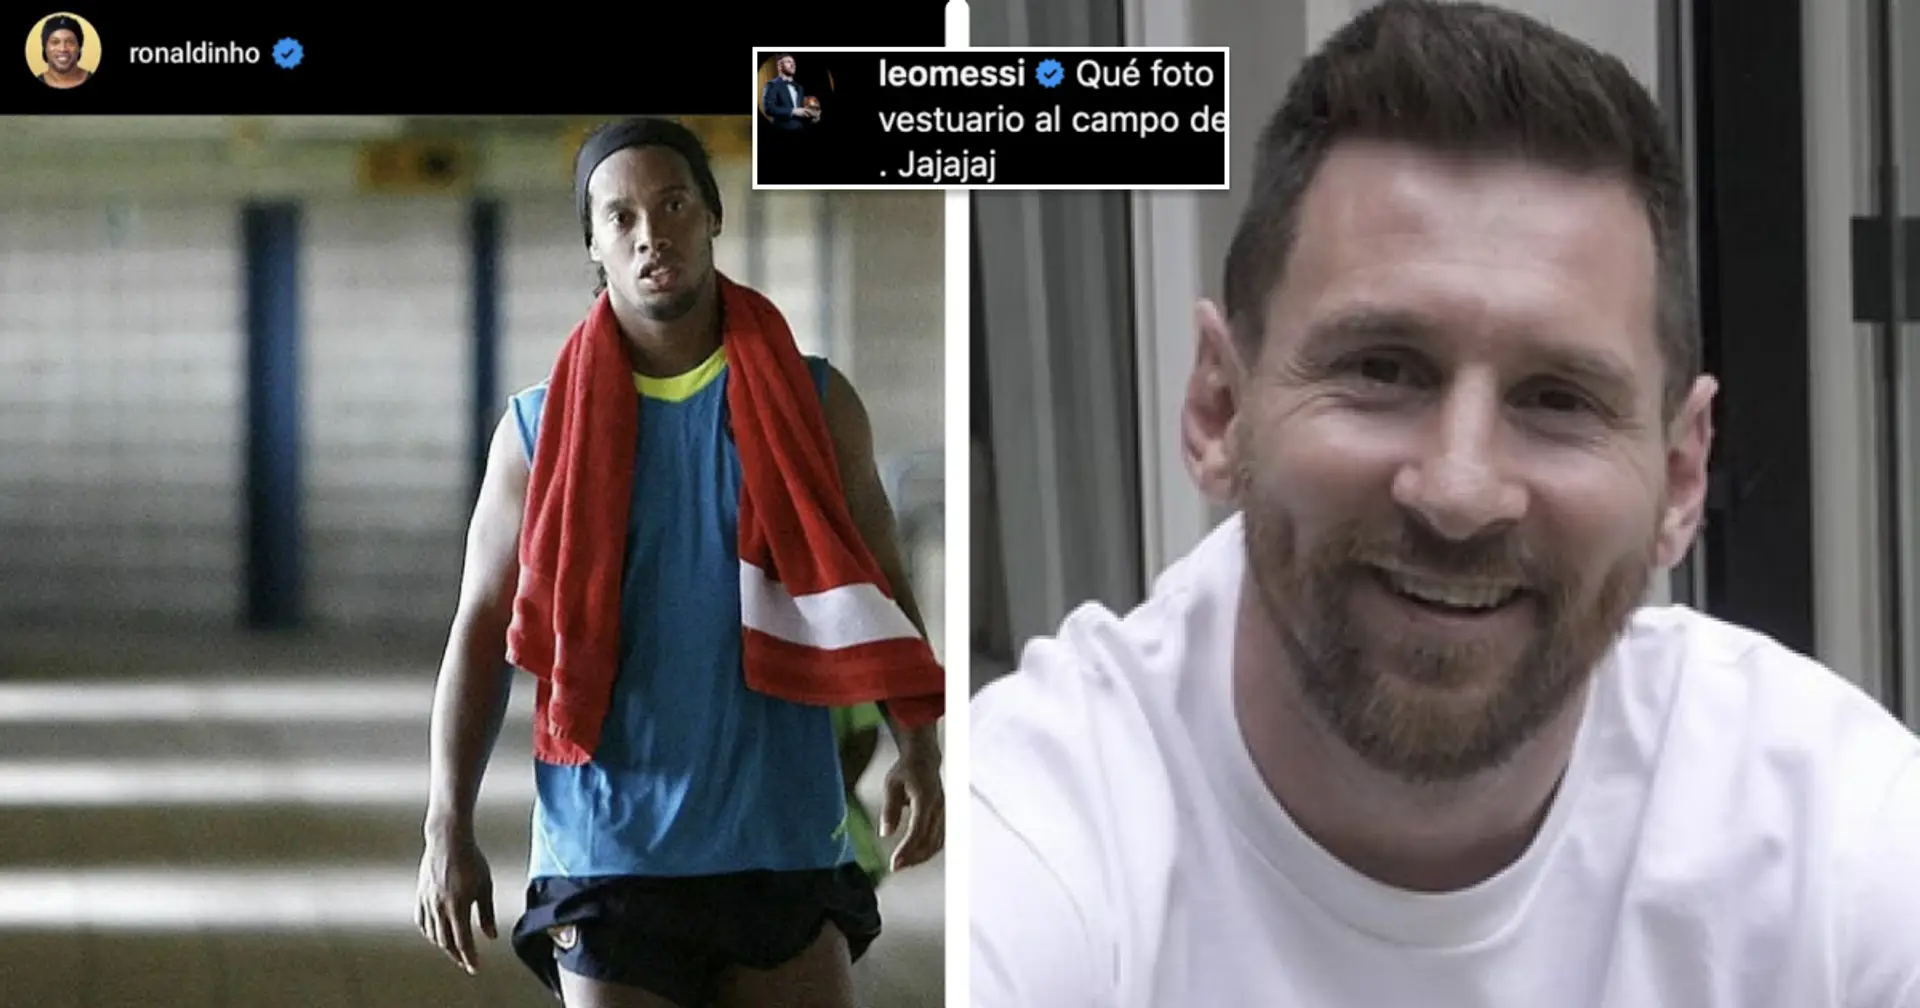 'Hahahaha': Messi comments on Ronaldinho's Instagram post